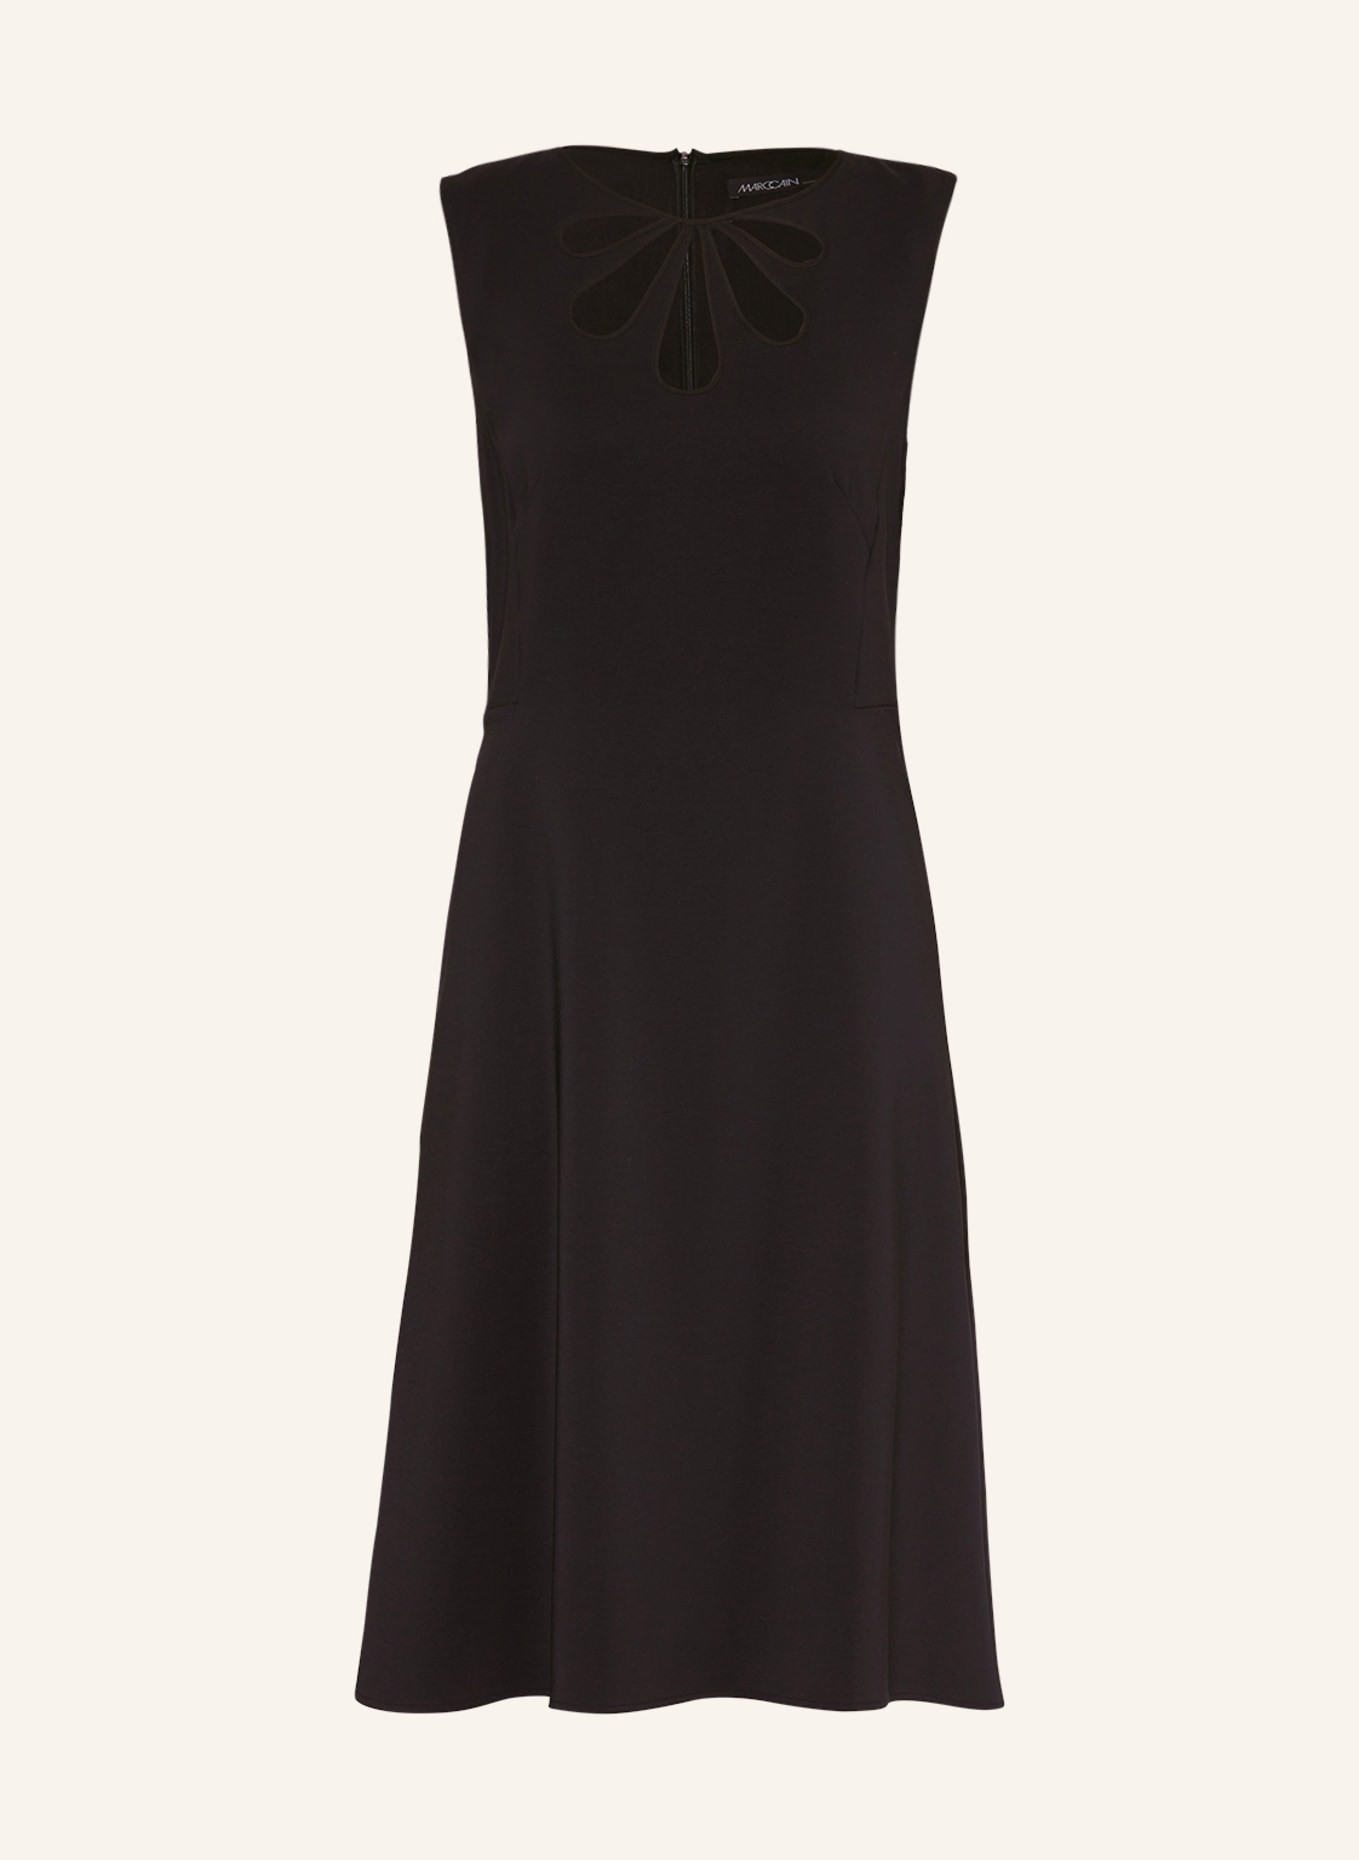 MARC CAIN Kleid mit Cut-outs, Farbe: 900 BLACK (Bild 1)